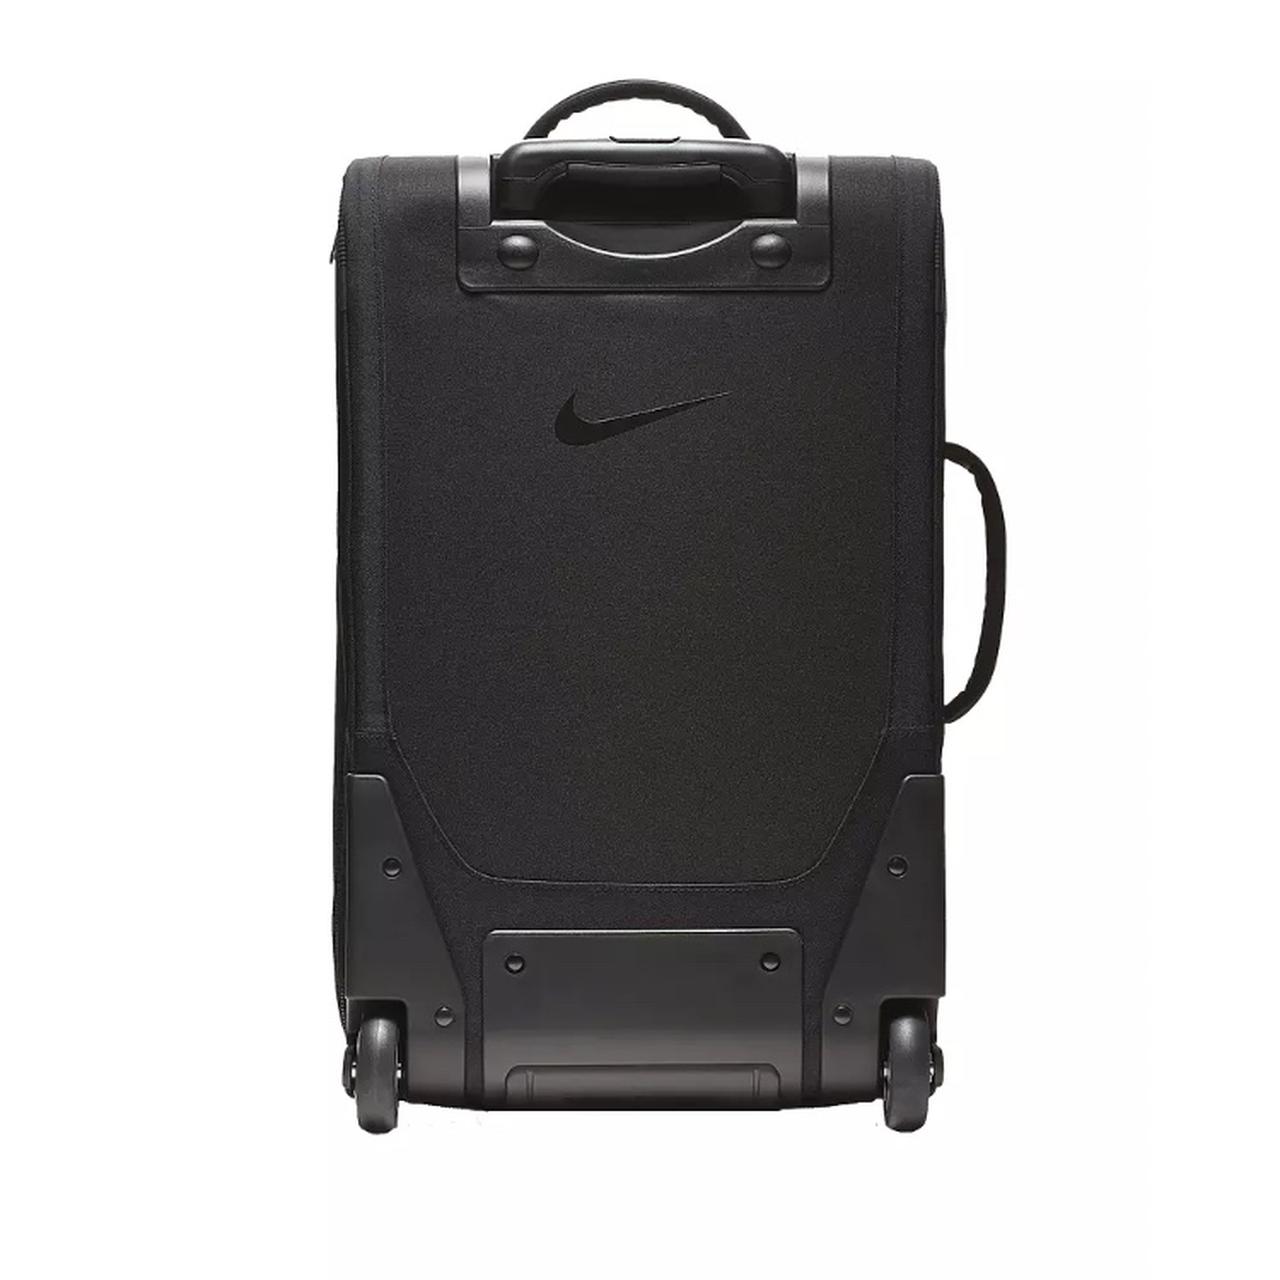 Nike Luggage Roller Suitcase Black Travel Bag Wheel... - Depop